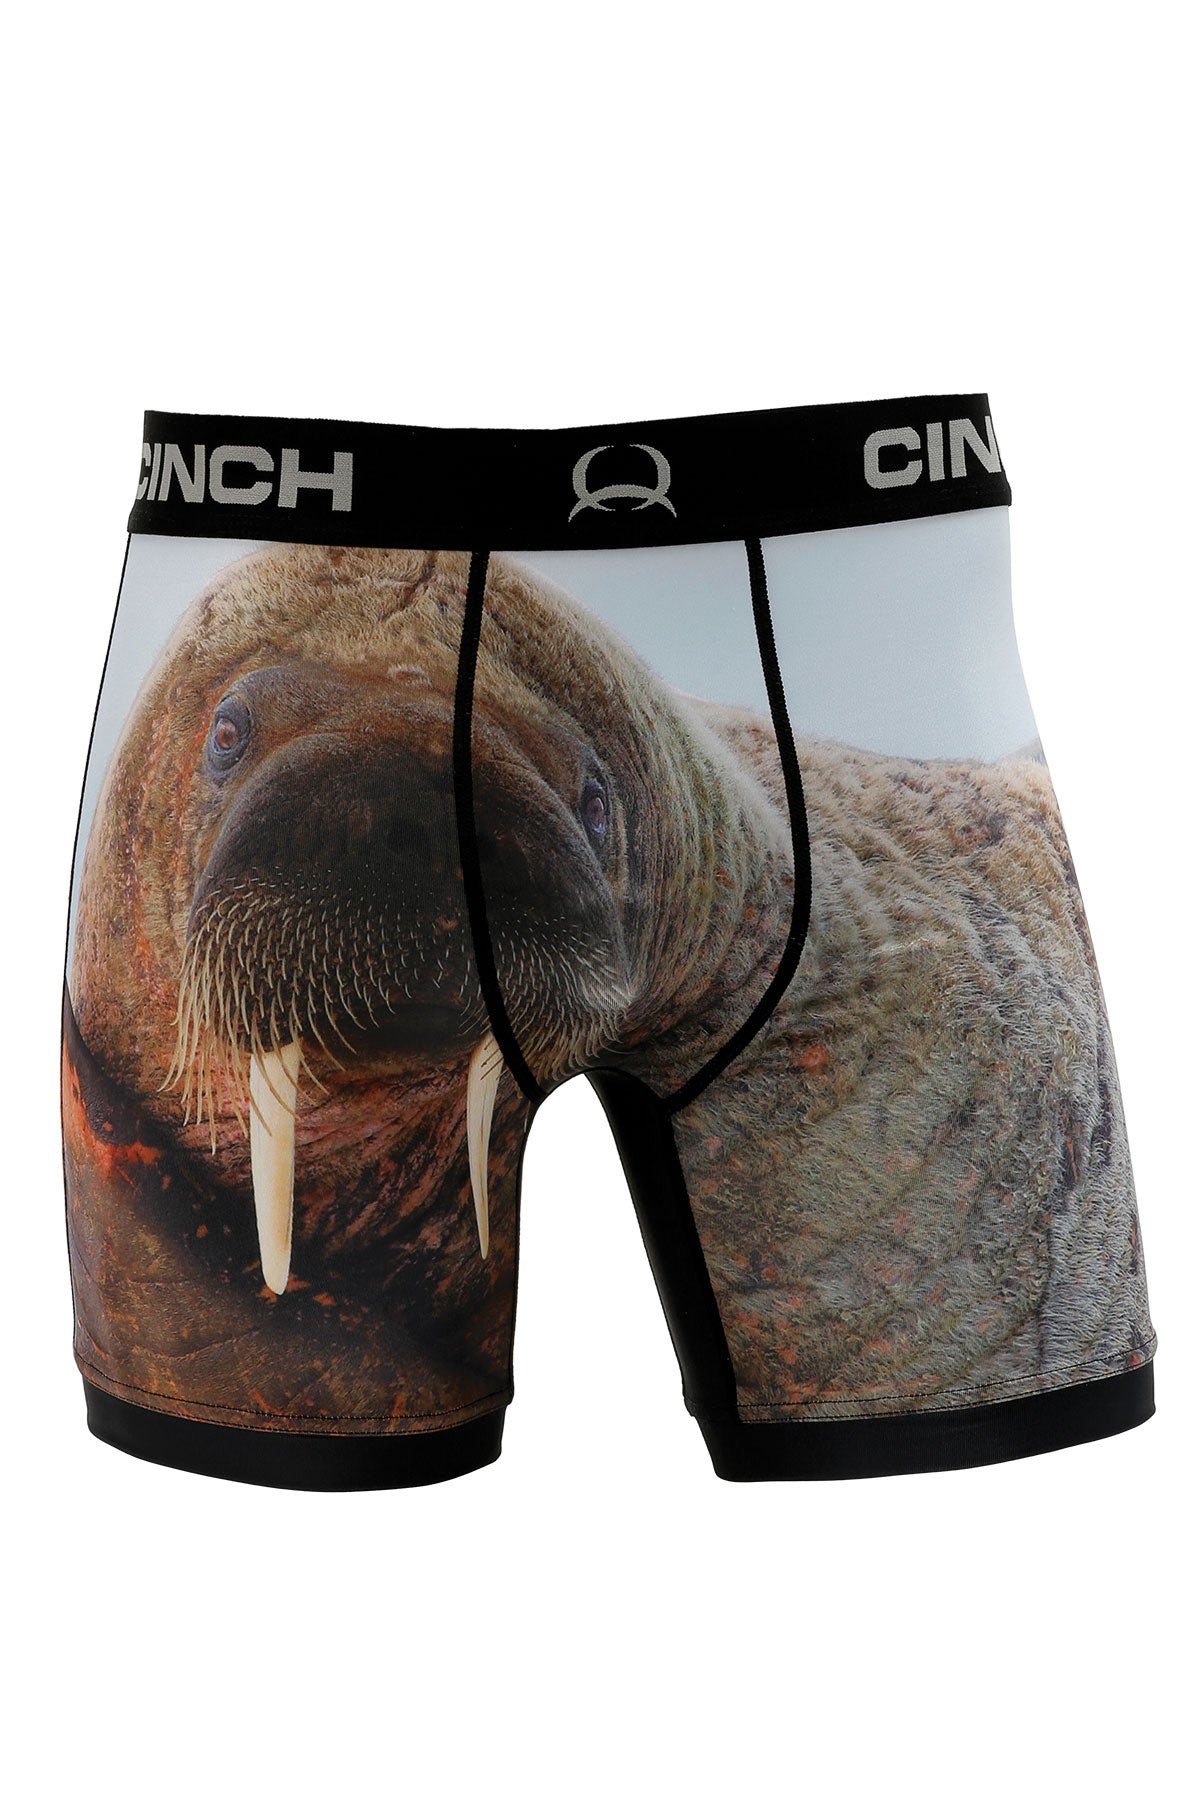 Cinch Walrus 6” Underwear (9012)